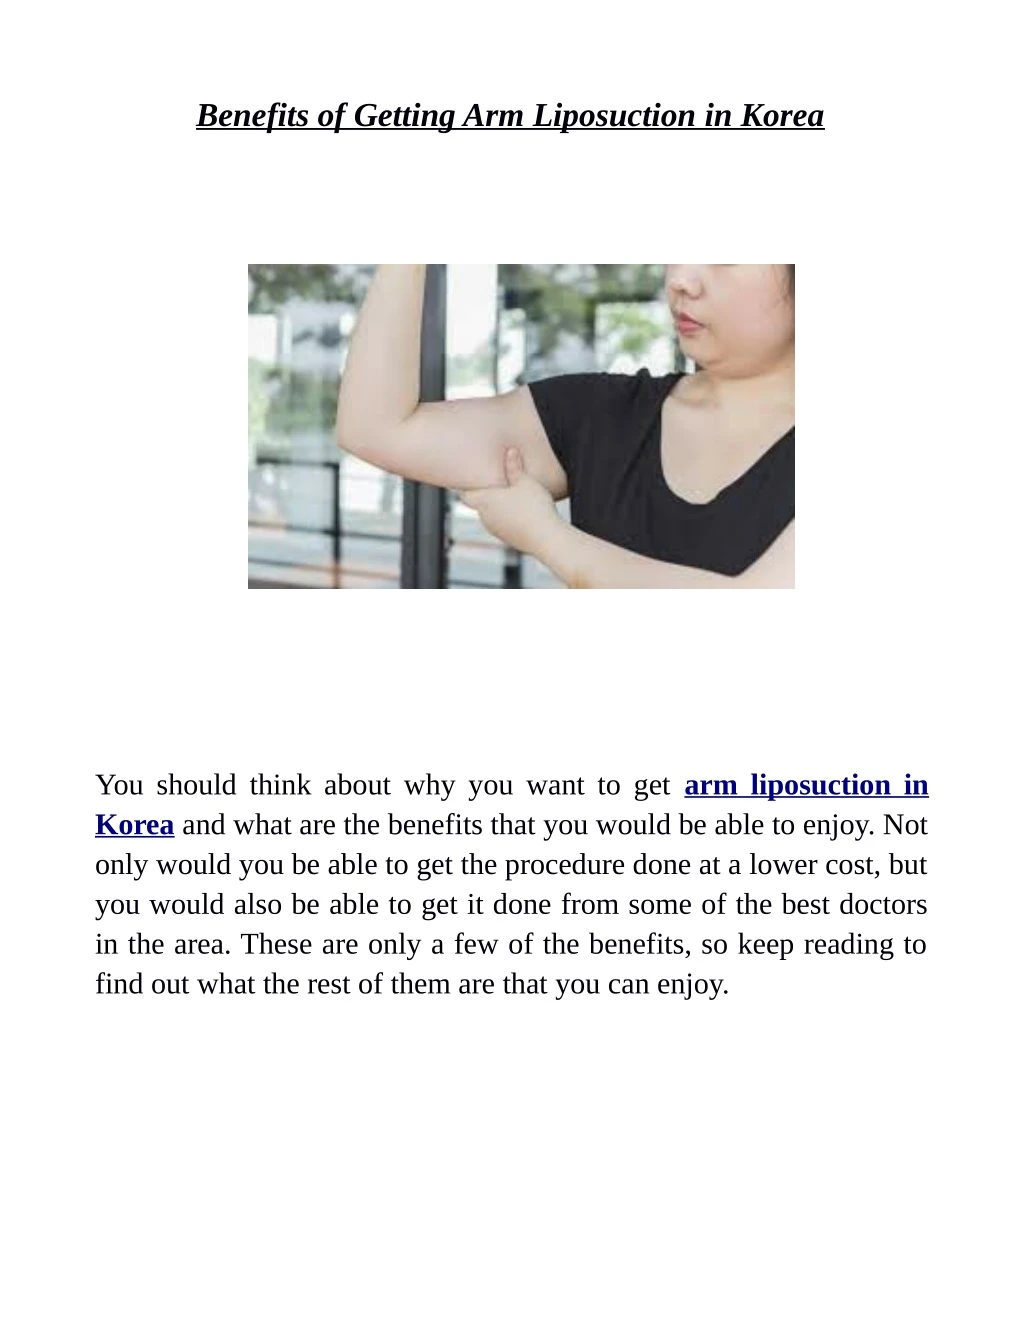 benefits of getting arm liposuction in korea